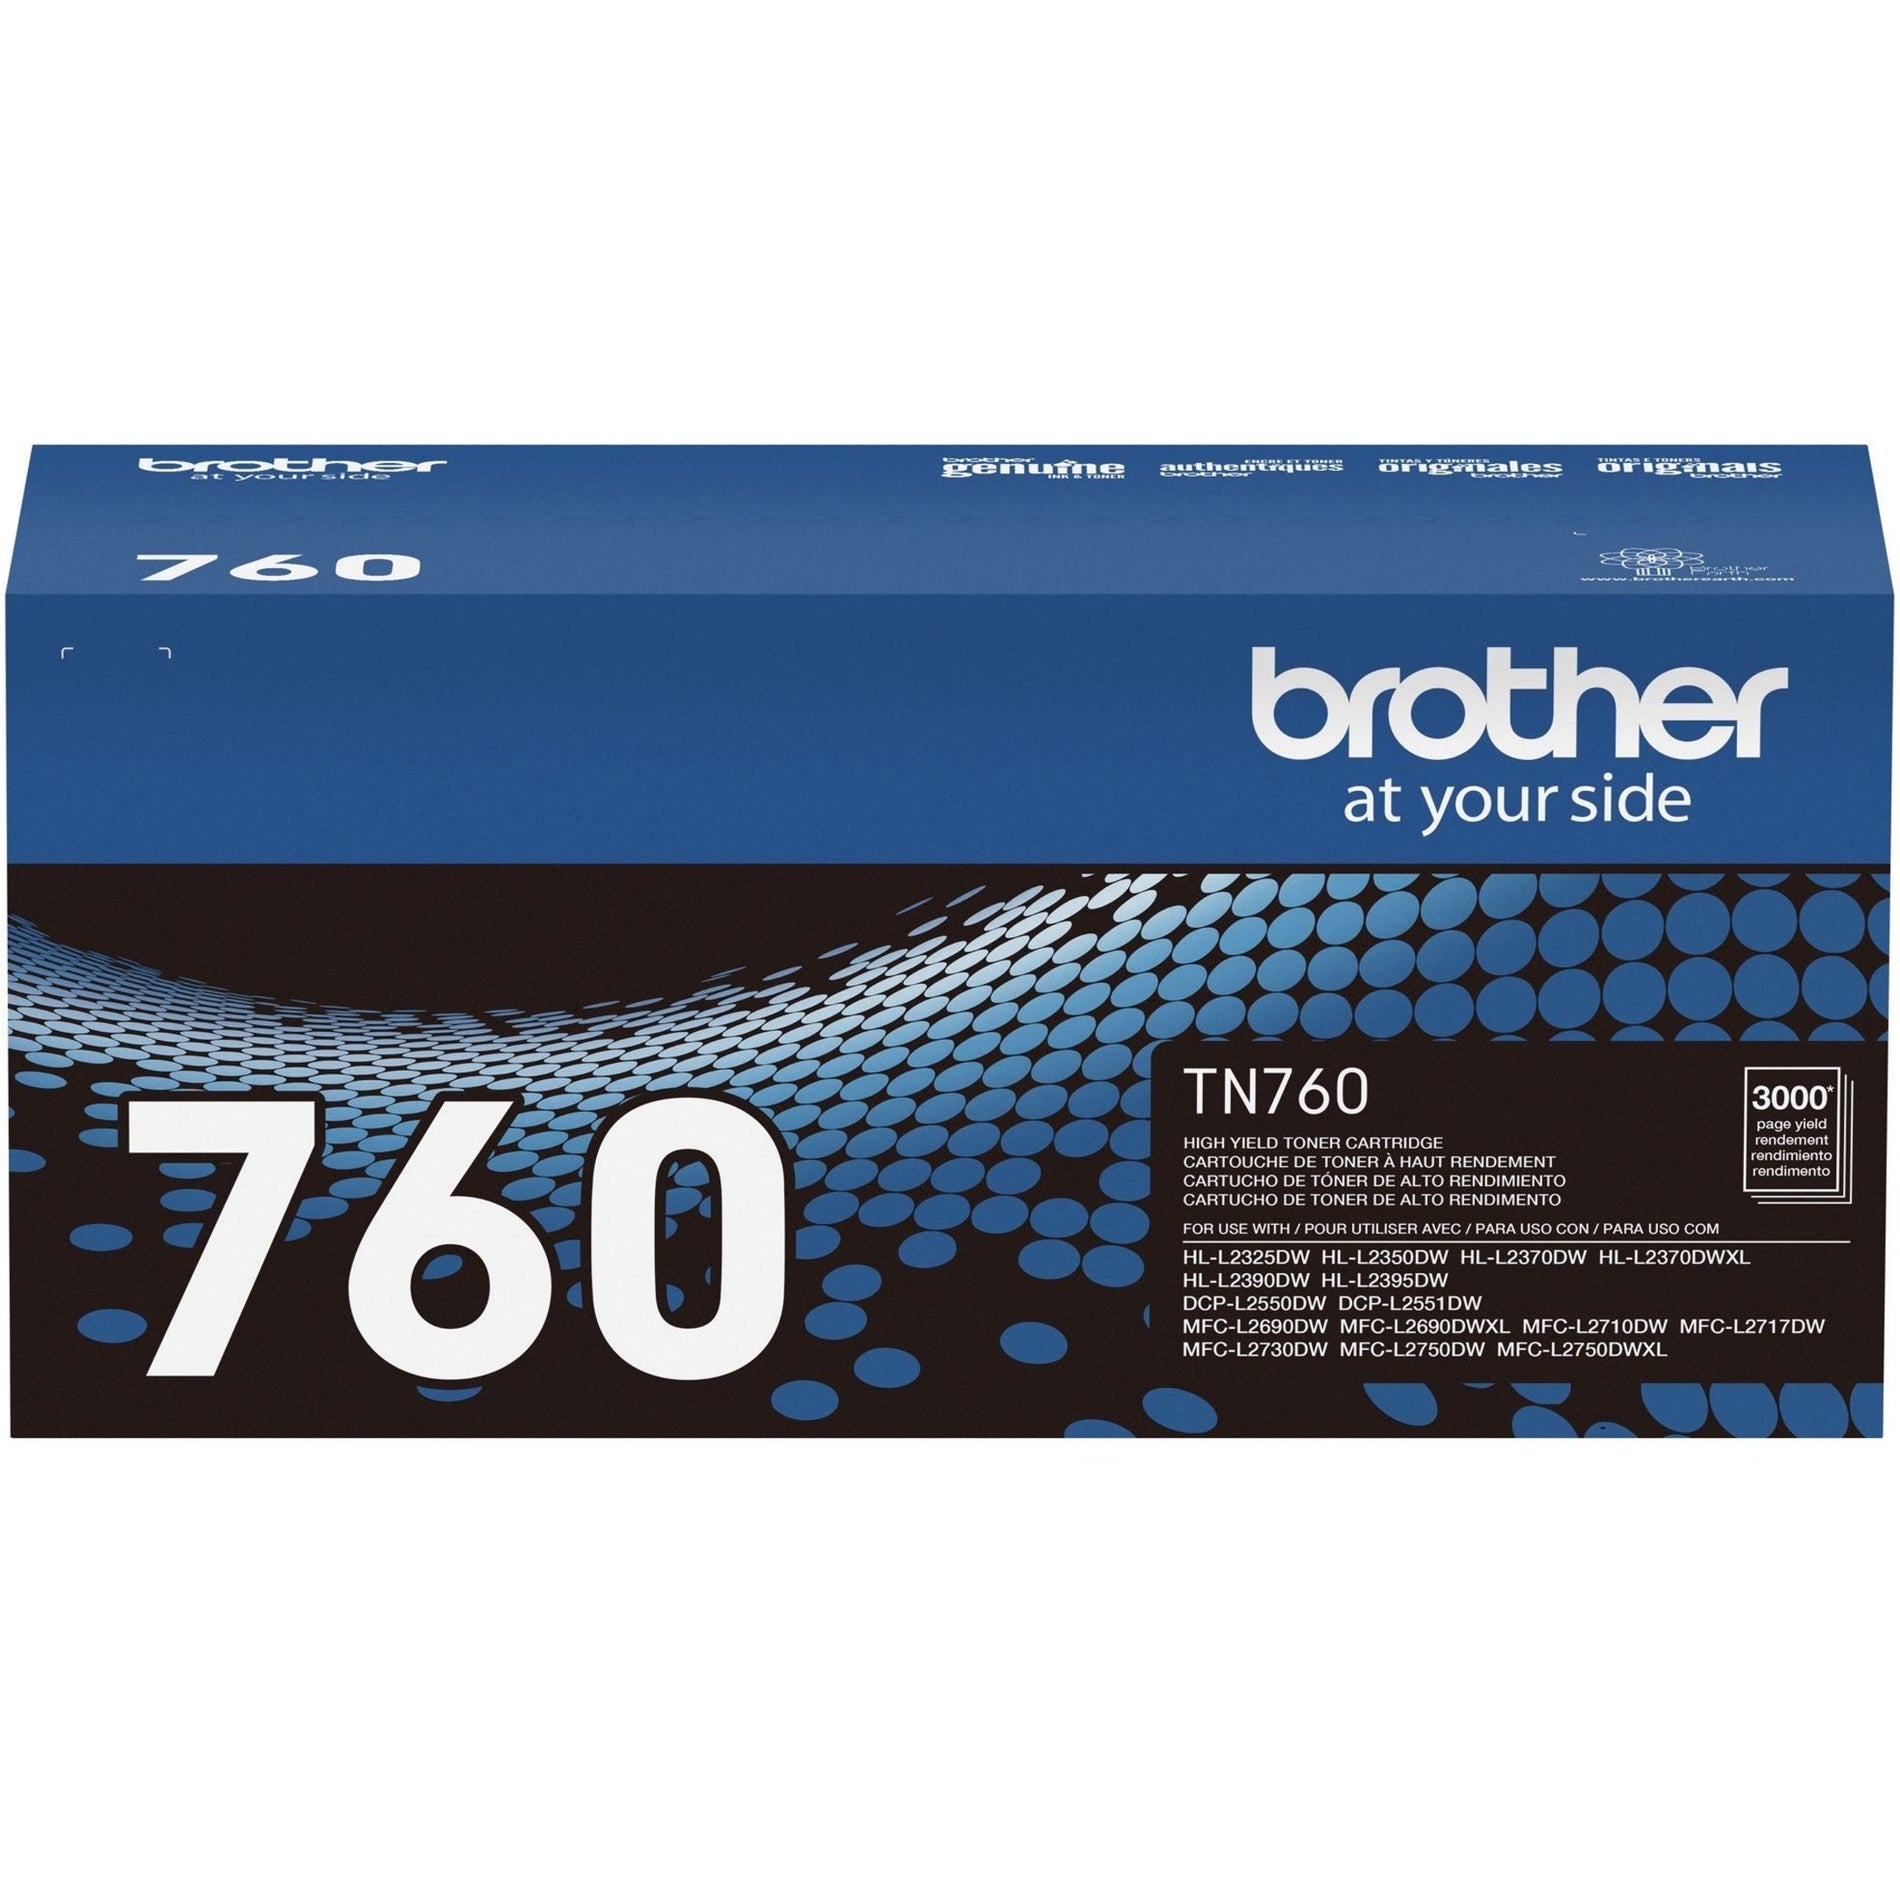 Brother TN-760 Genuine High Yield Toner Cartridge - Black, Compatible with HL-L2350DW, HL-L2390DW, HL-L2395DW, HL-L2370DW, DCP-L2550DW, MFC-L2710DW, MFC-L2750DW, HL-L2370DW XL, MFC-L2750DW XL